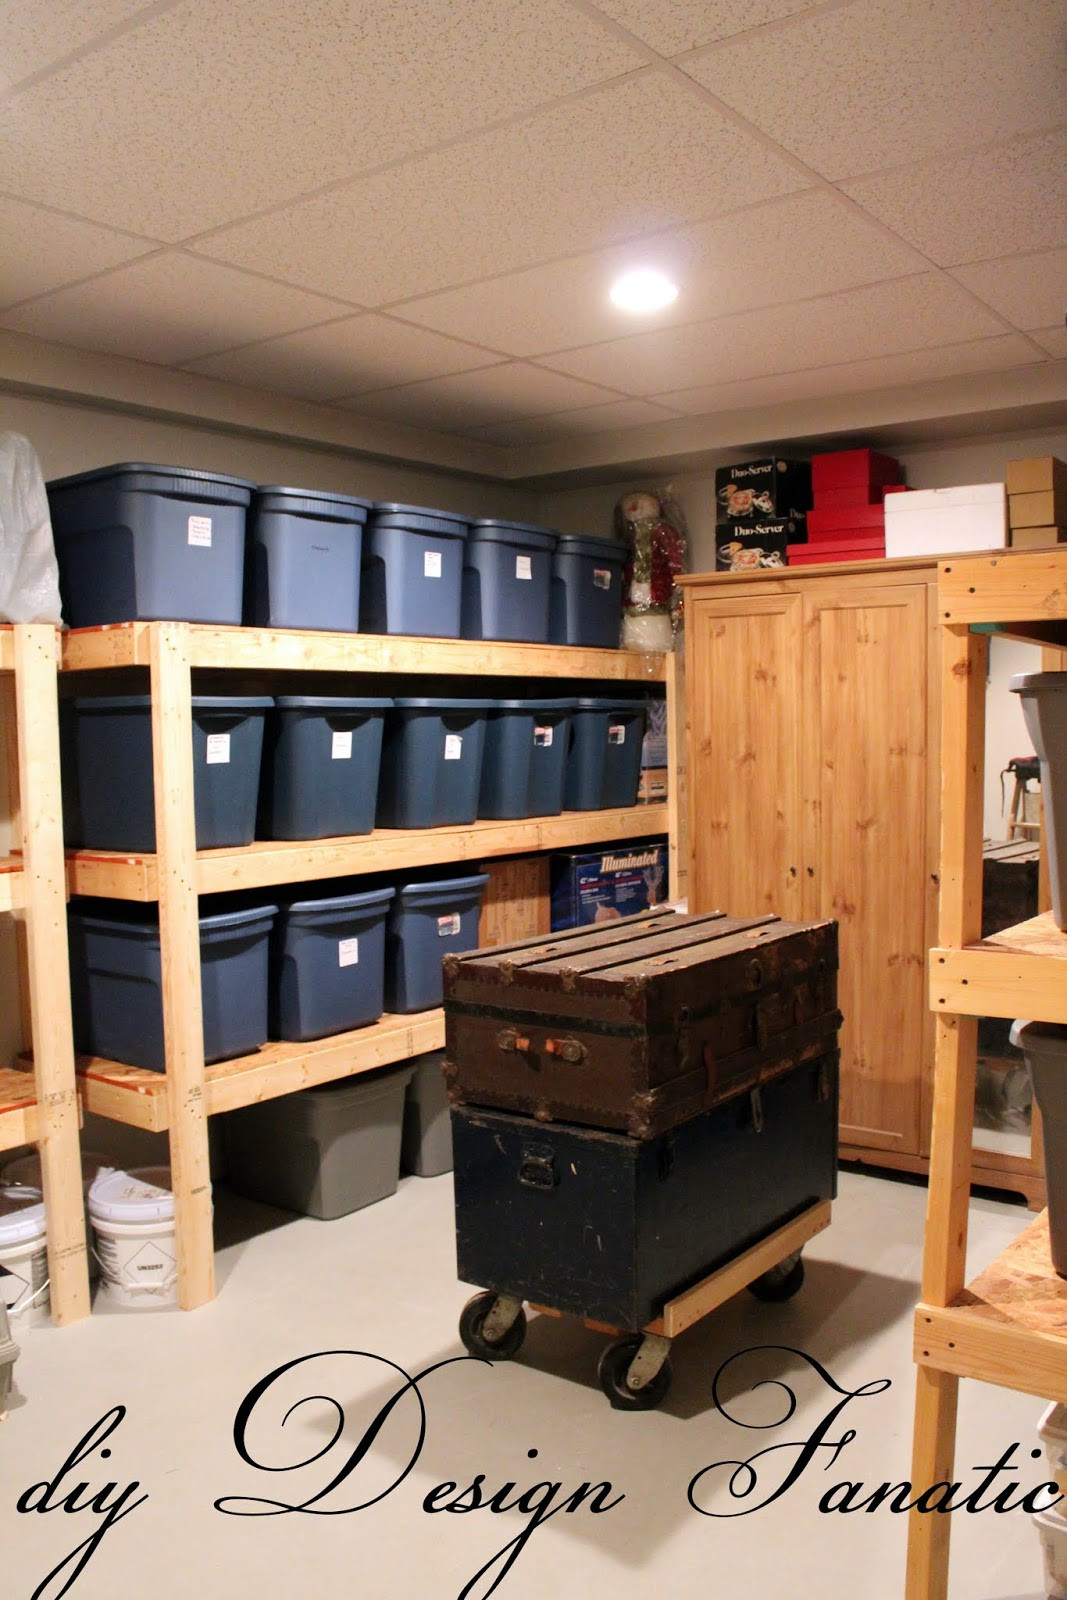 Best ideas about Diy Garage Storage Shelf
. Save or Pin storage shelves Now.